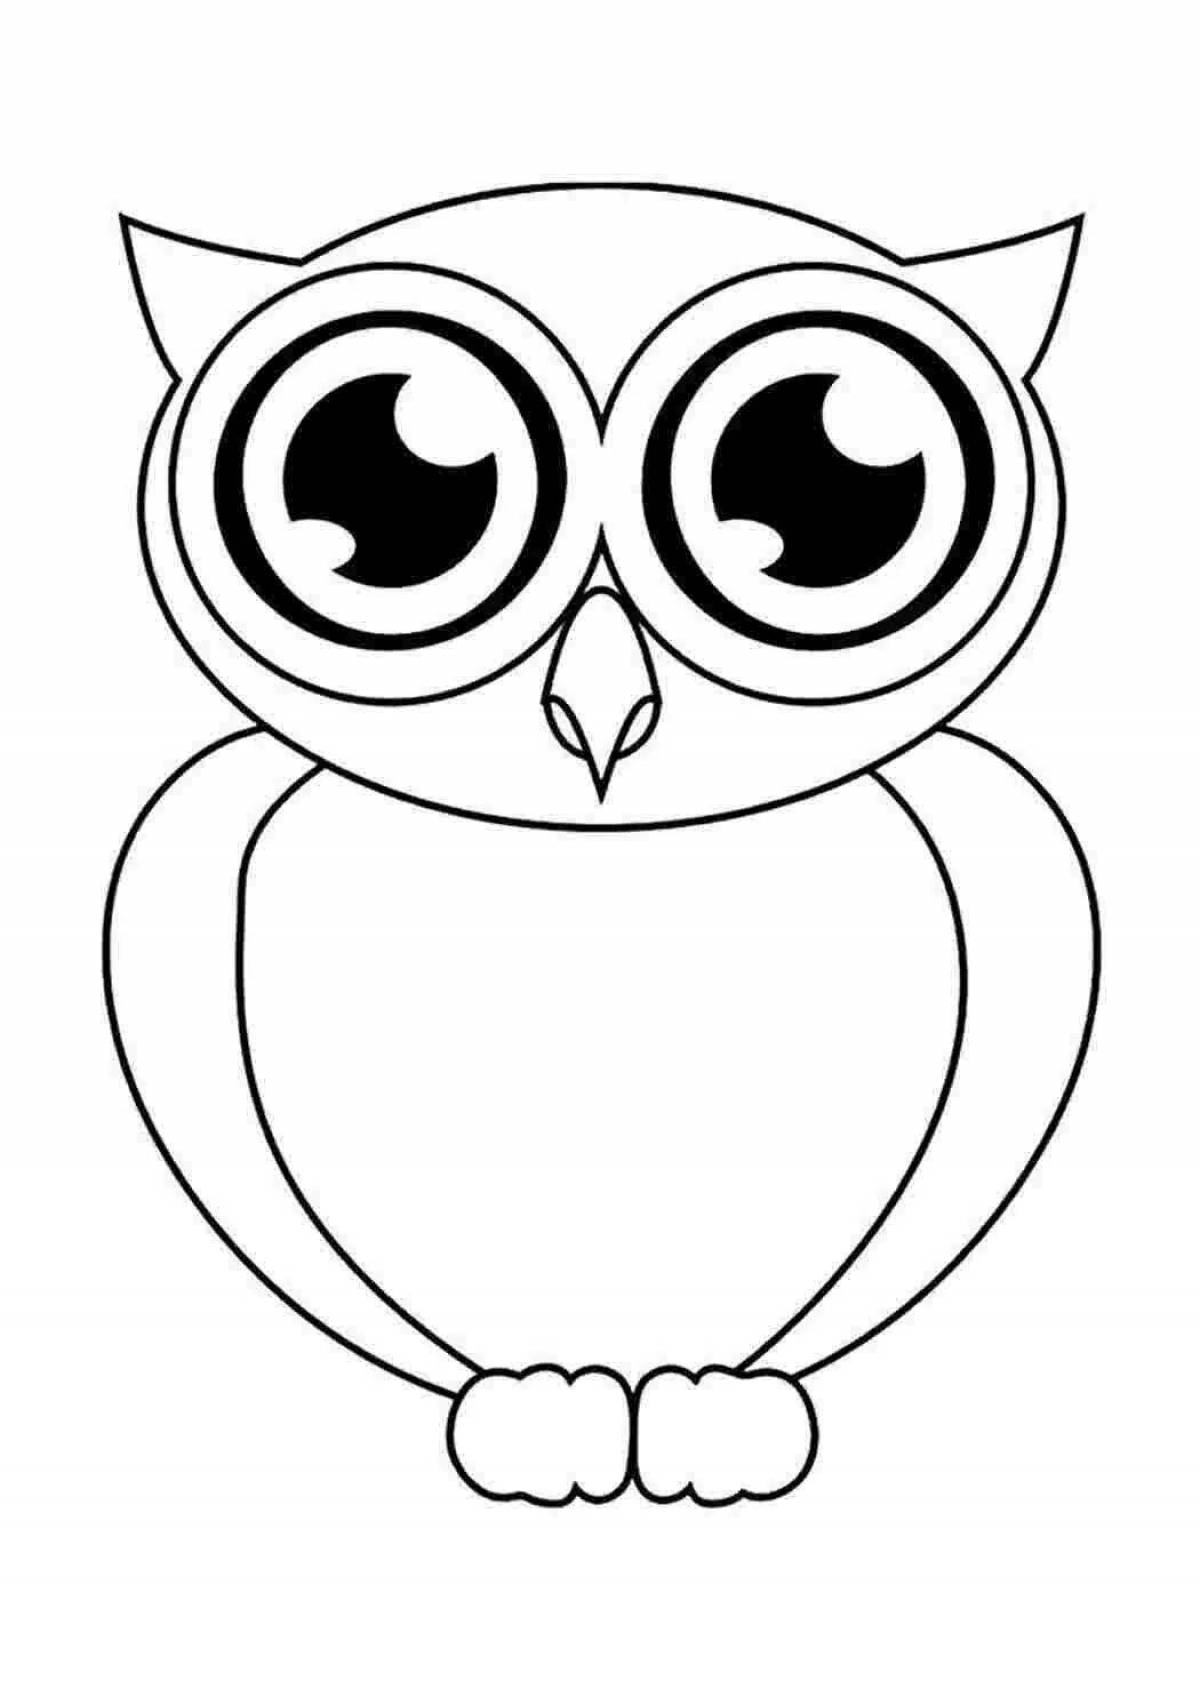 Fun coloring book with cute owl